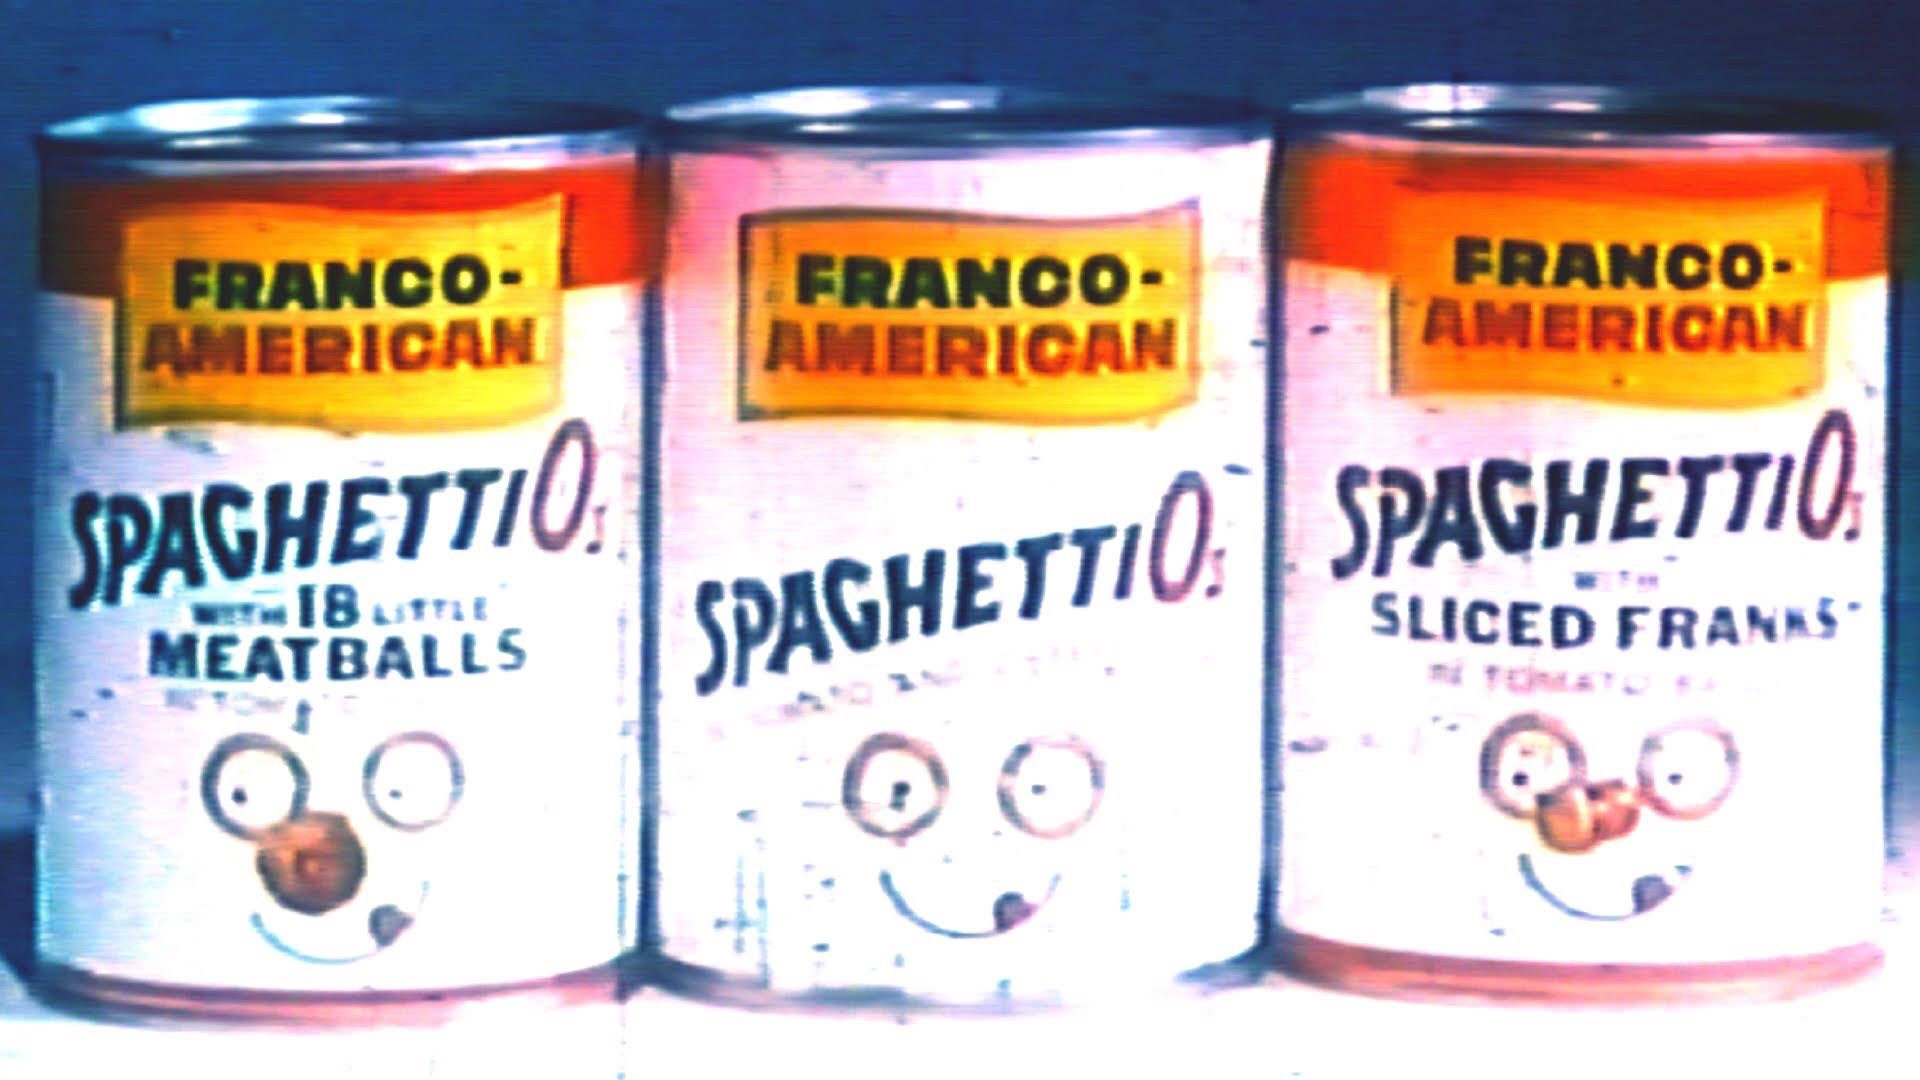 Junk Fed » Uh-Oh, SpaghettiOs!